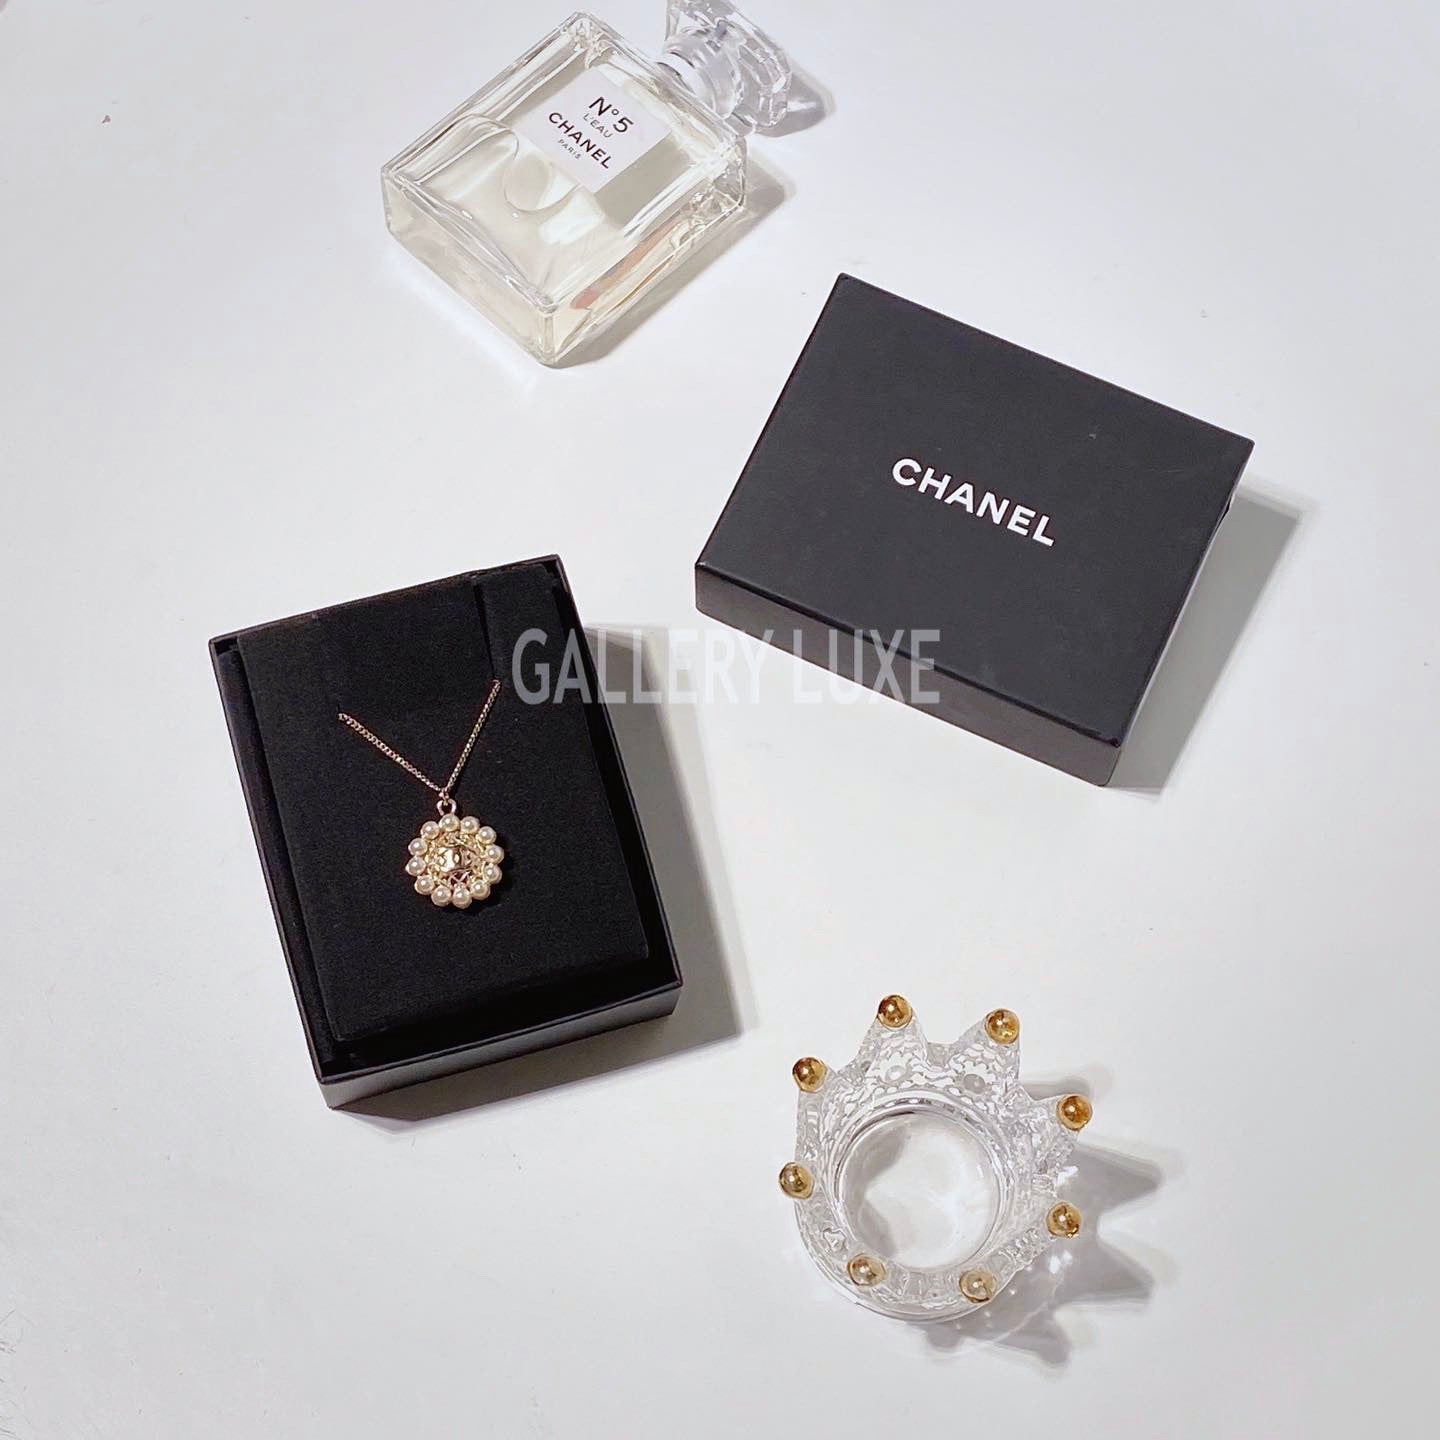 CHANEL, Jewelry, Chanel Cc Bunny Pendant Necklacesku 3292